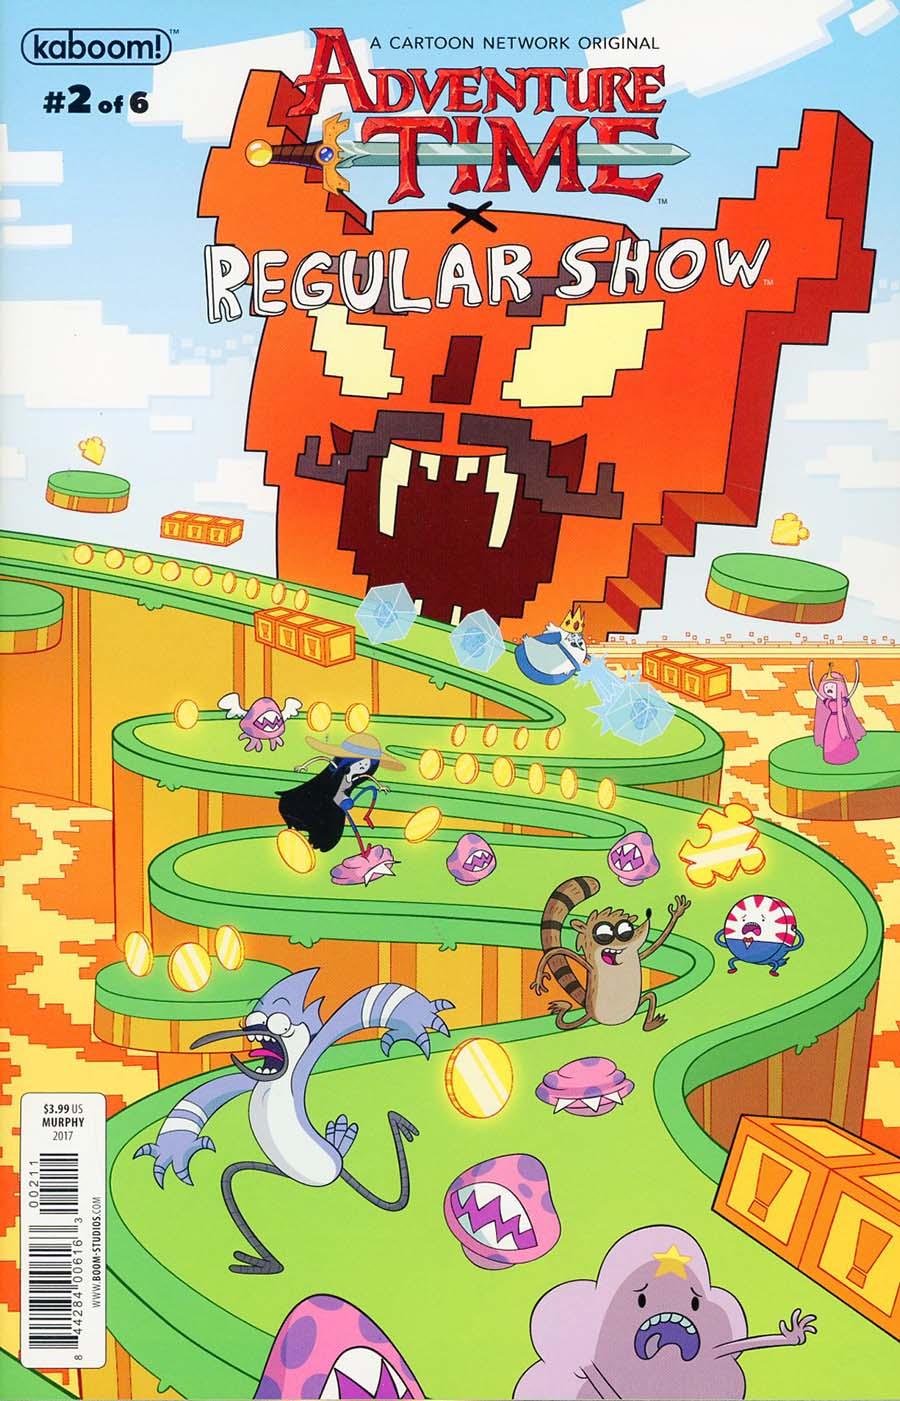 Adventure Time Regular Show Vol. 1 #2